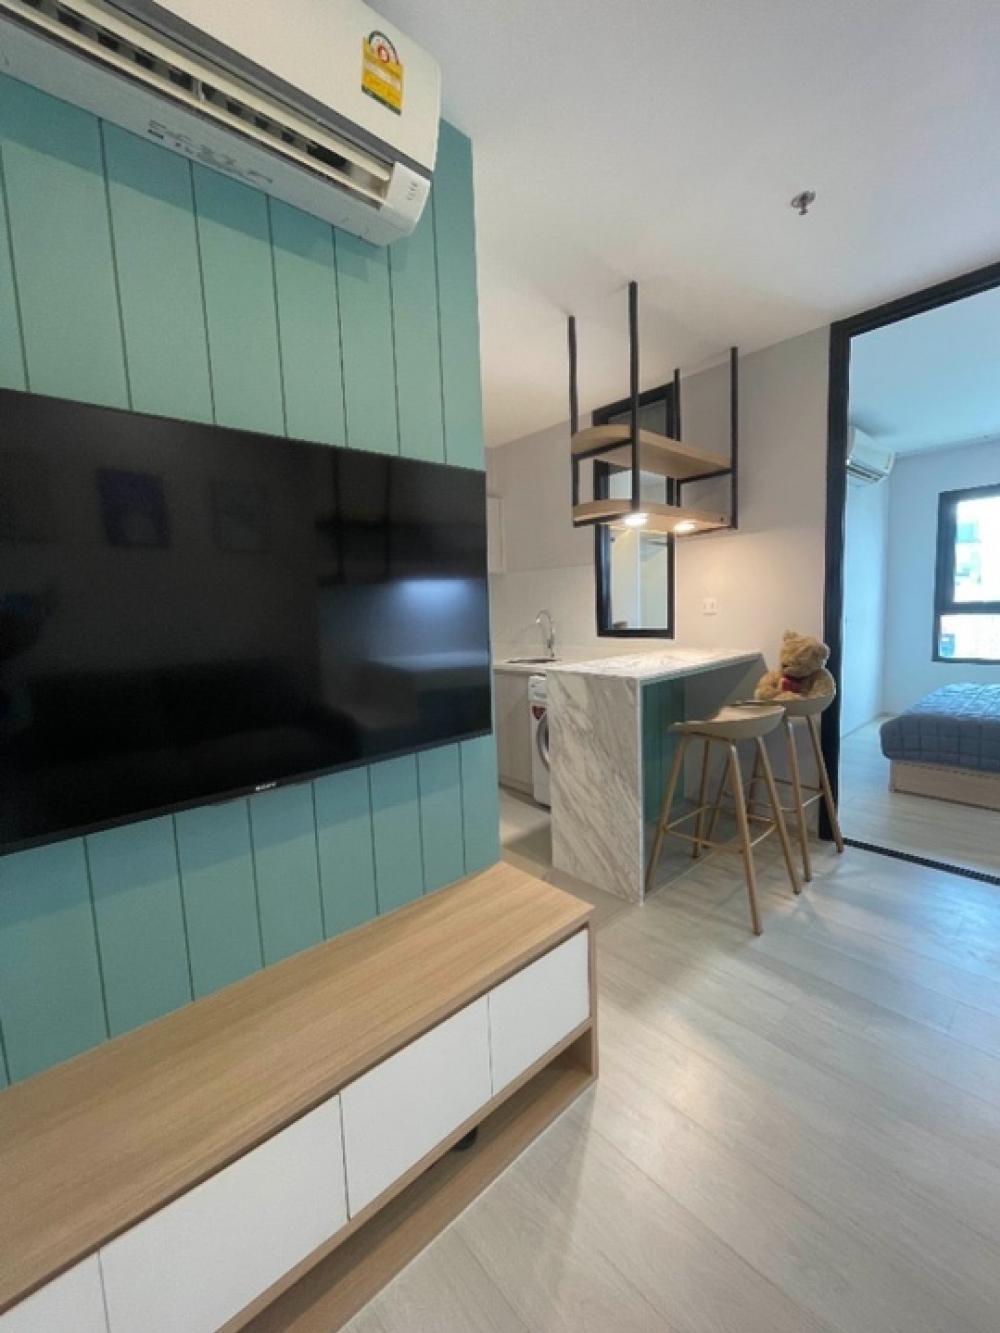 For RentCondoRama9, Petchburi, RCA : **For Rent** Life Asoke, new room, 35 sq m, 1 bedroom, city view, next to MRT